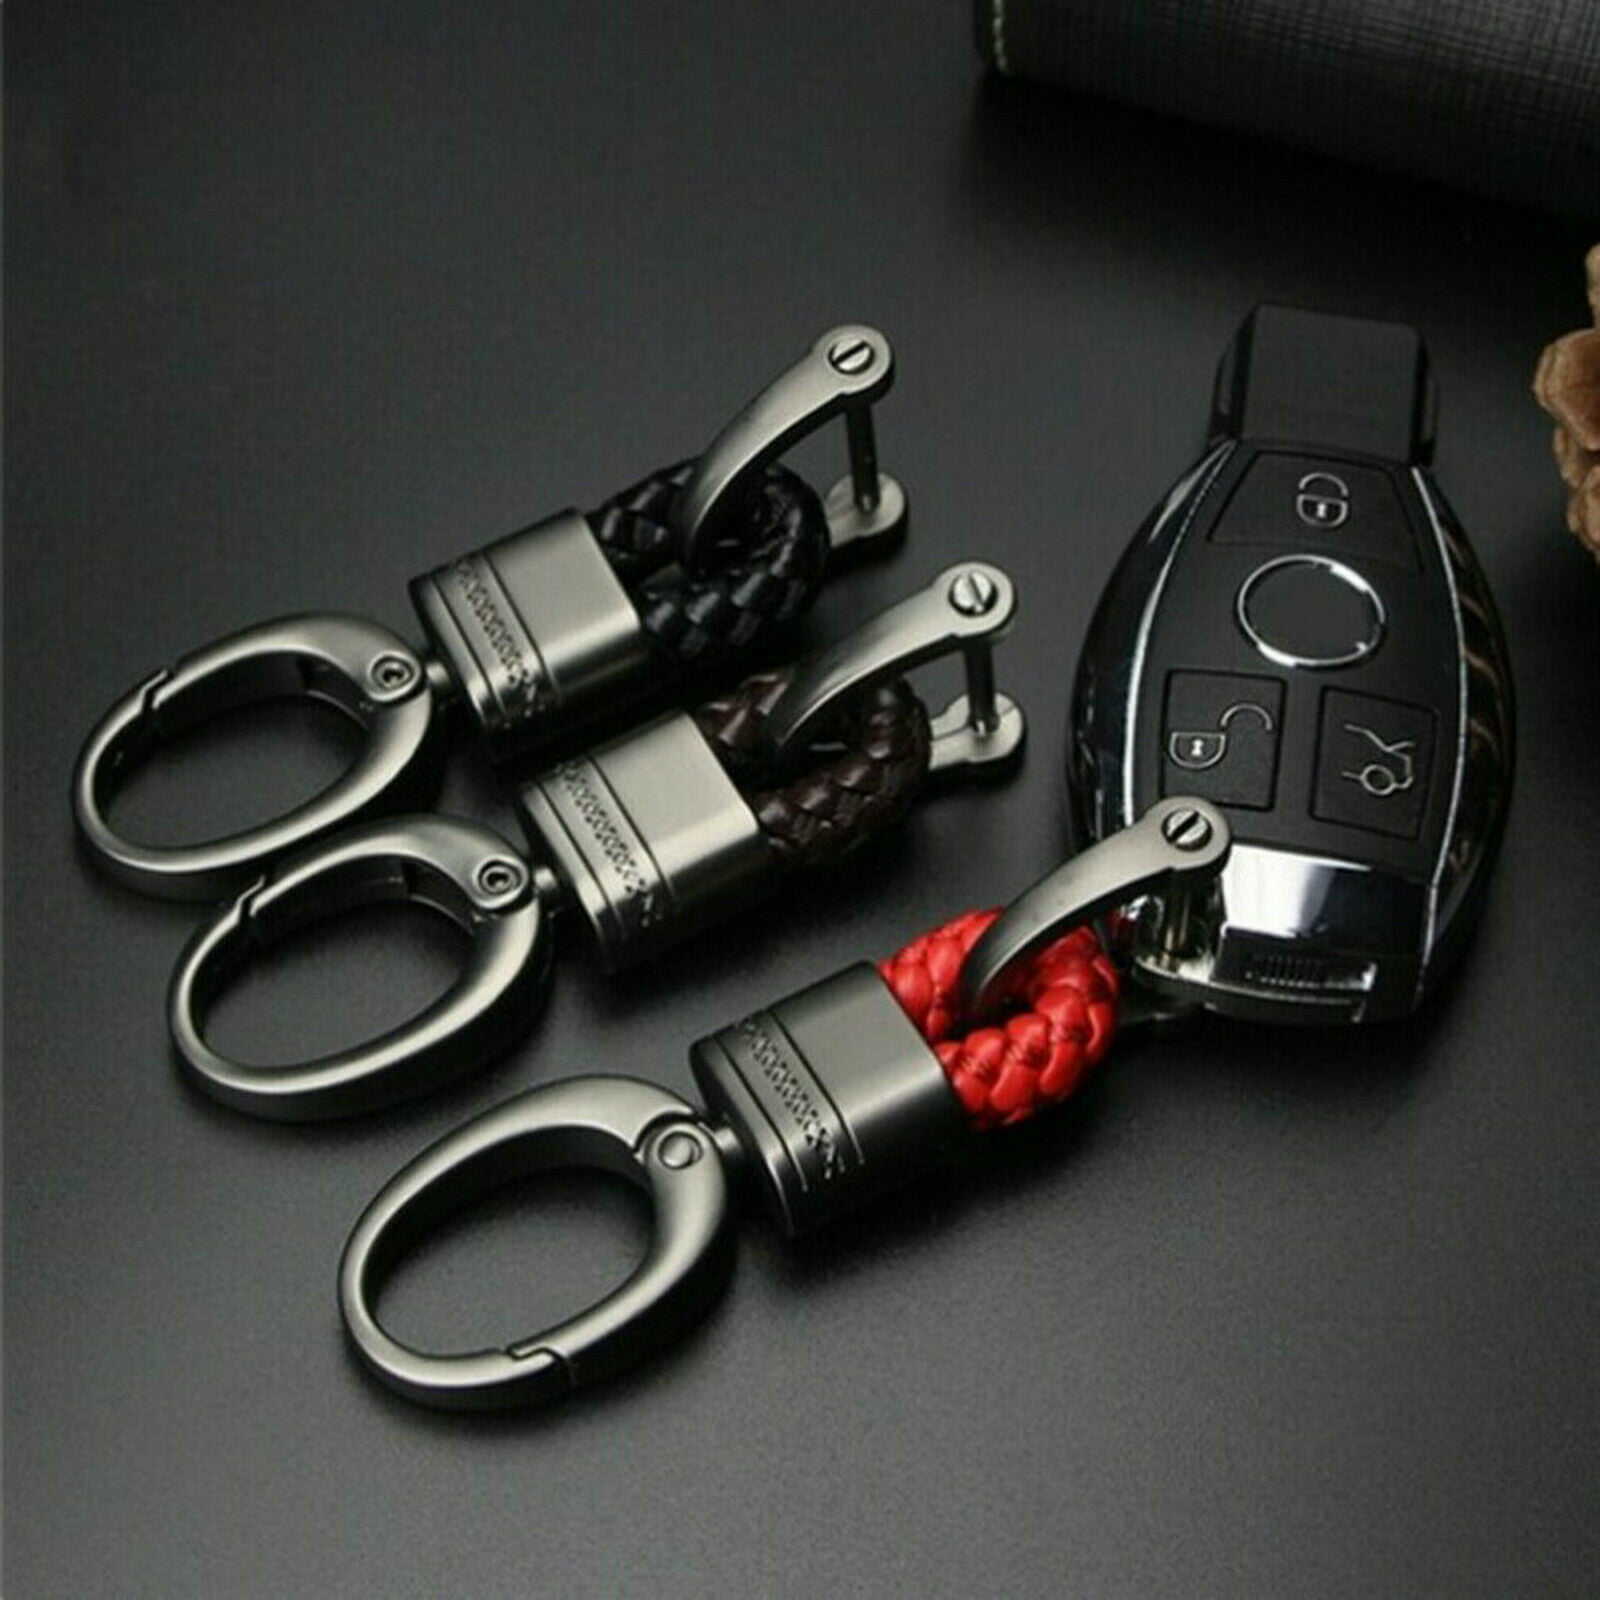 1x Men's Creative Metal Leather Car Keyring Keychain Key Chain Ring Keyfob Gifts 